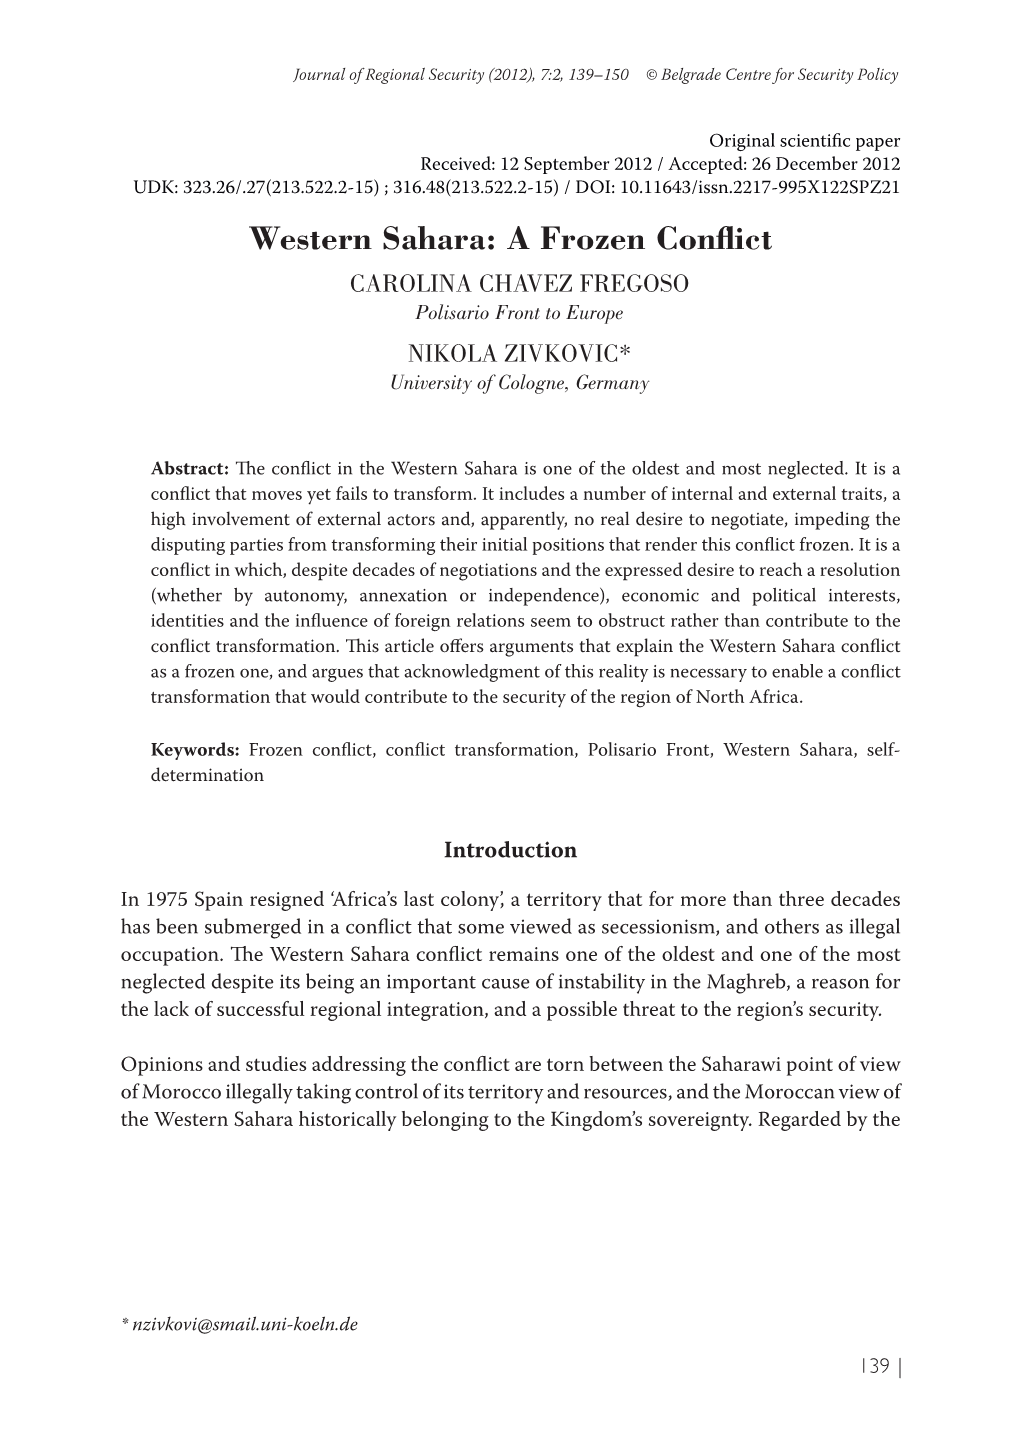 Western Sahara: a Frozen Conflict CAROLINA CHAVEZ FREGOSO Polisario Front to Europe NIKOLA ZIVKOVIC* University of Cologne, Germany